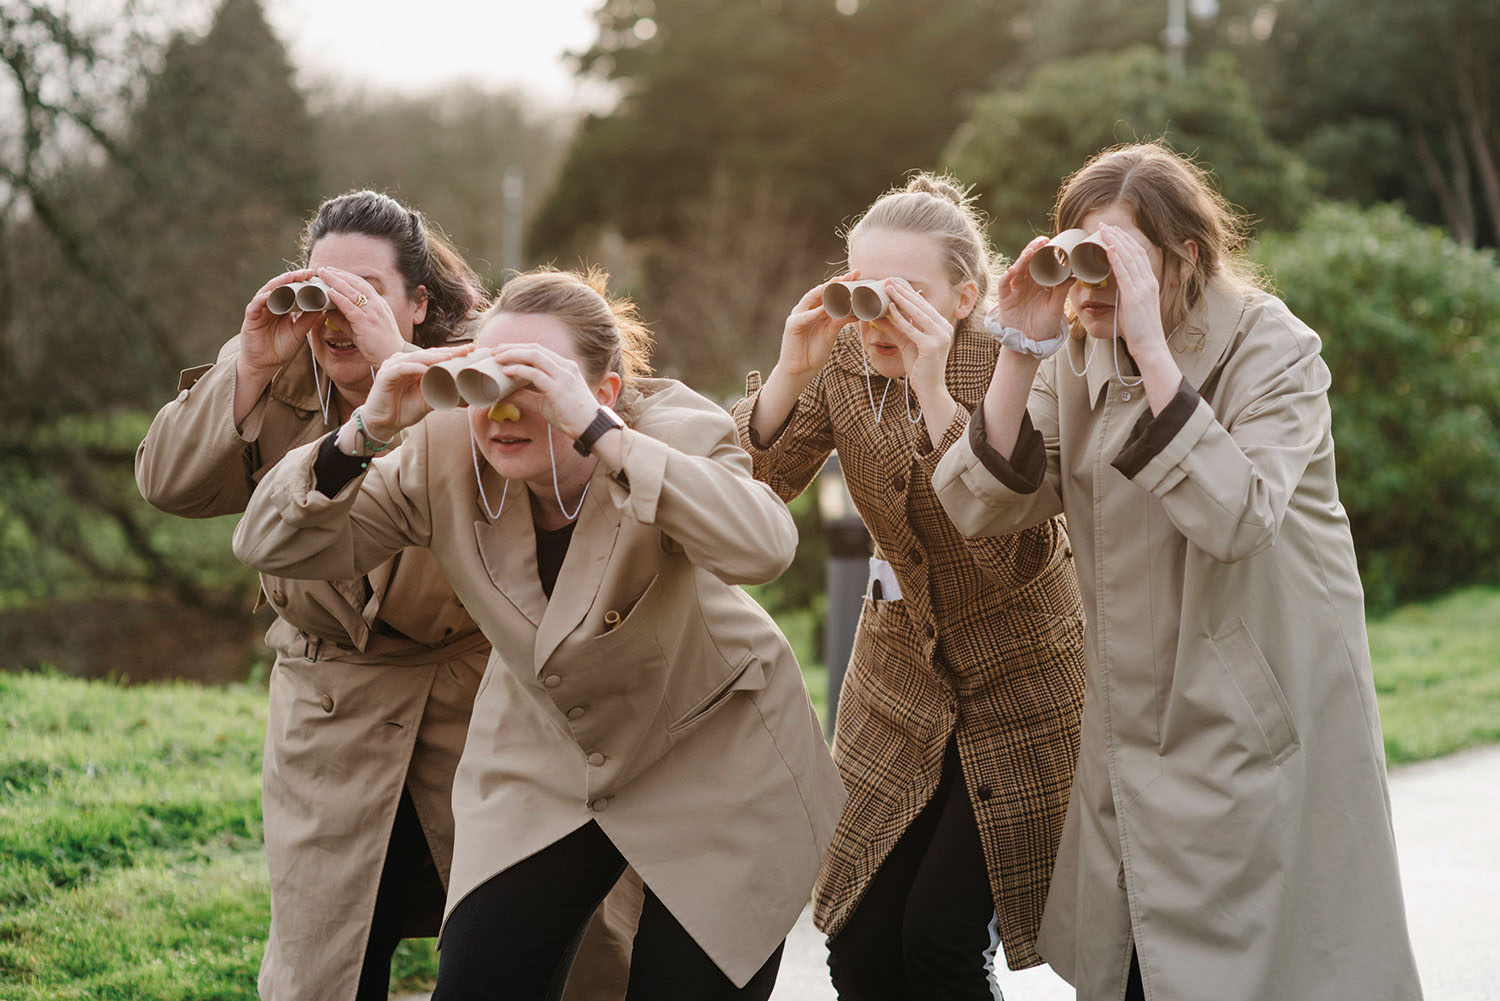 Student actors wear beige jackets and holding toilet rolls as binoculars